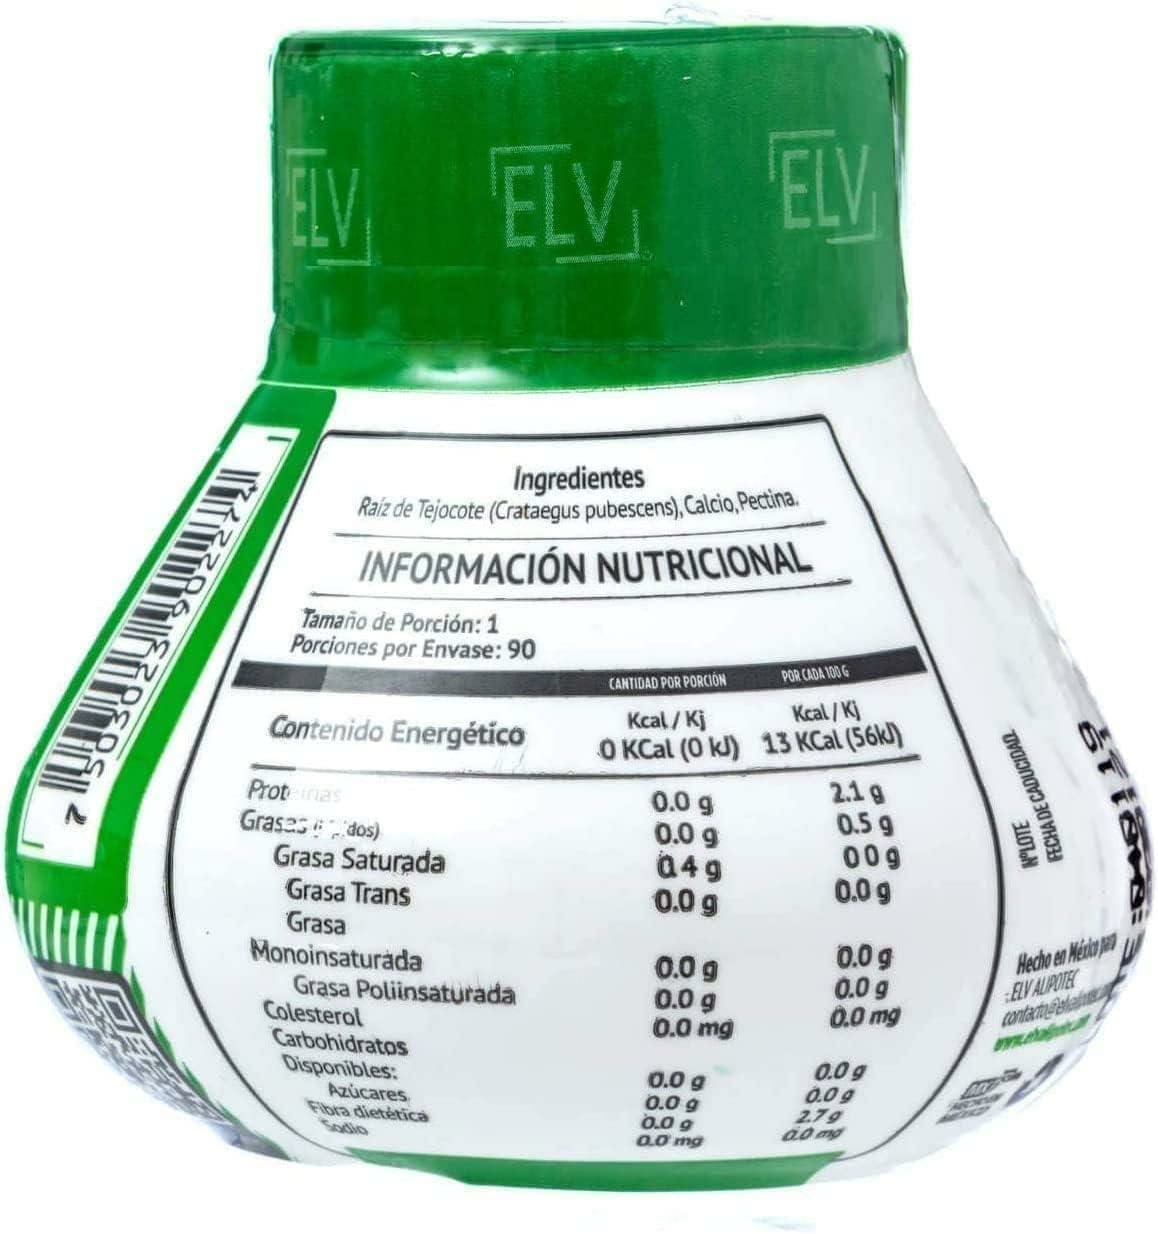 Nutraholics ELV Raiz de Tejocote Cleanse 3 Months Supply Original USA FDA Label